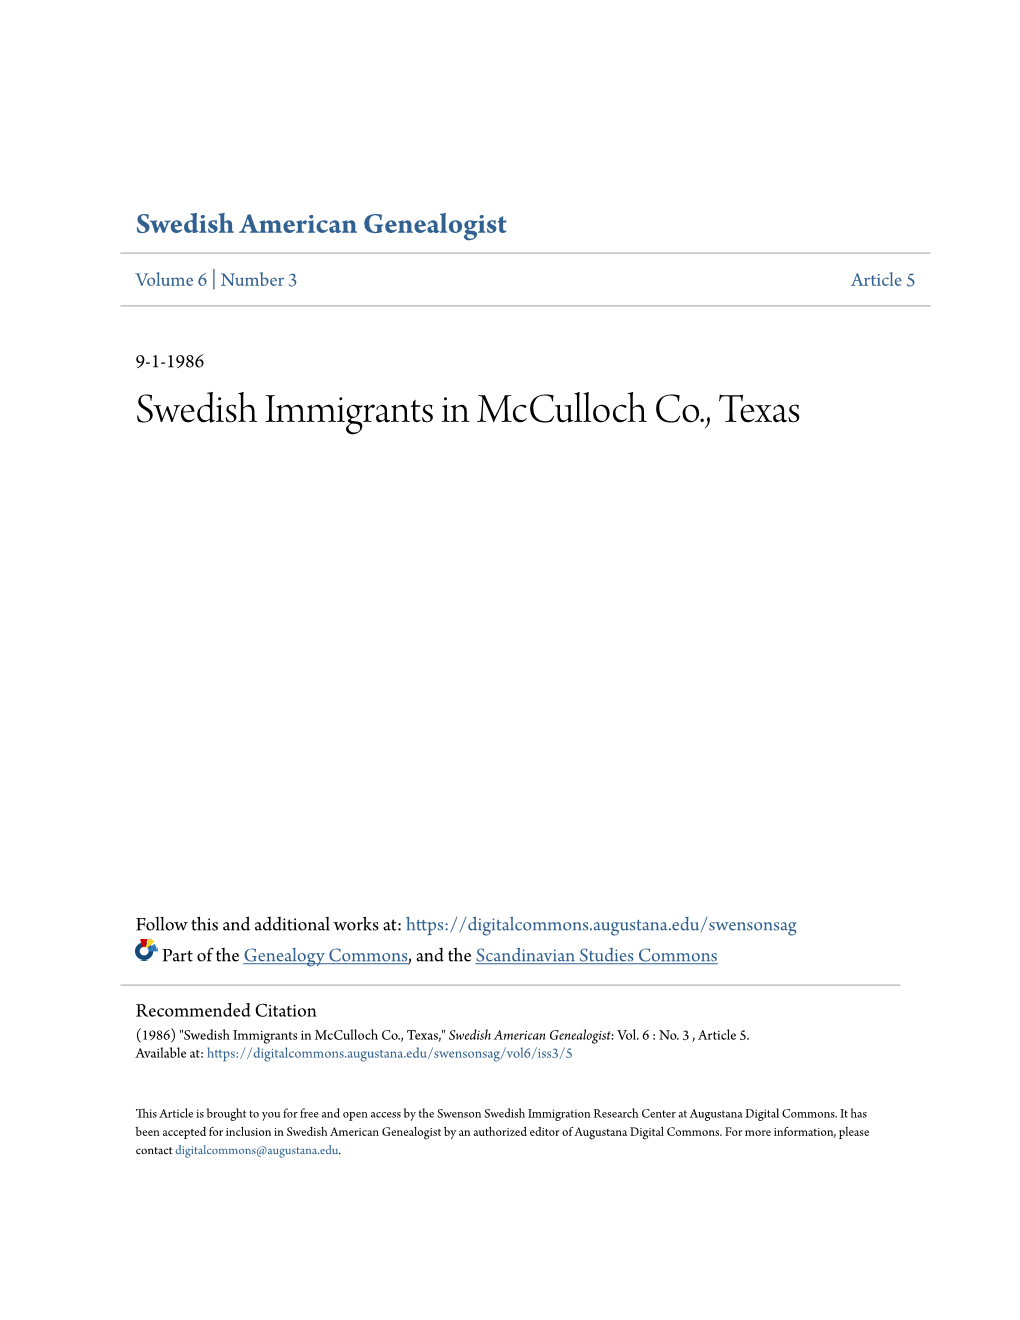 Swedish Immigrants in Mcculloch Co., Texas